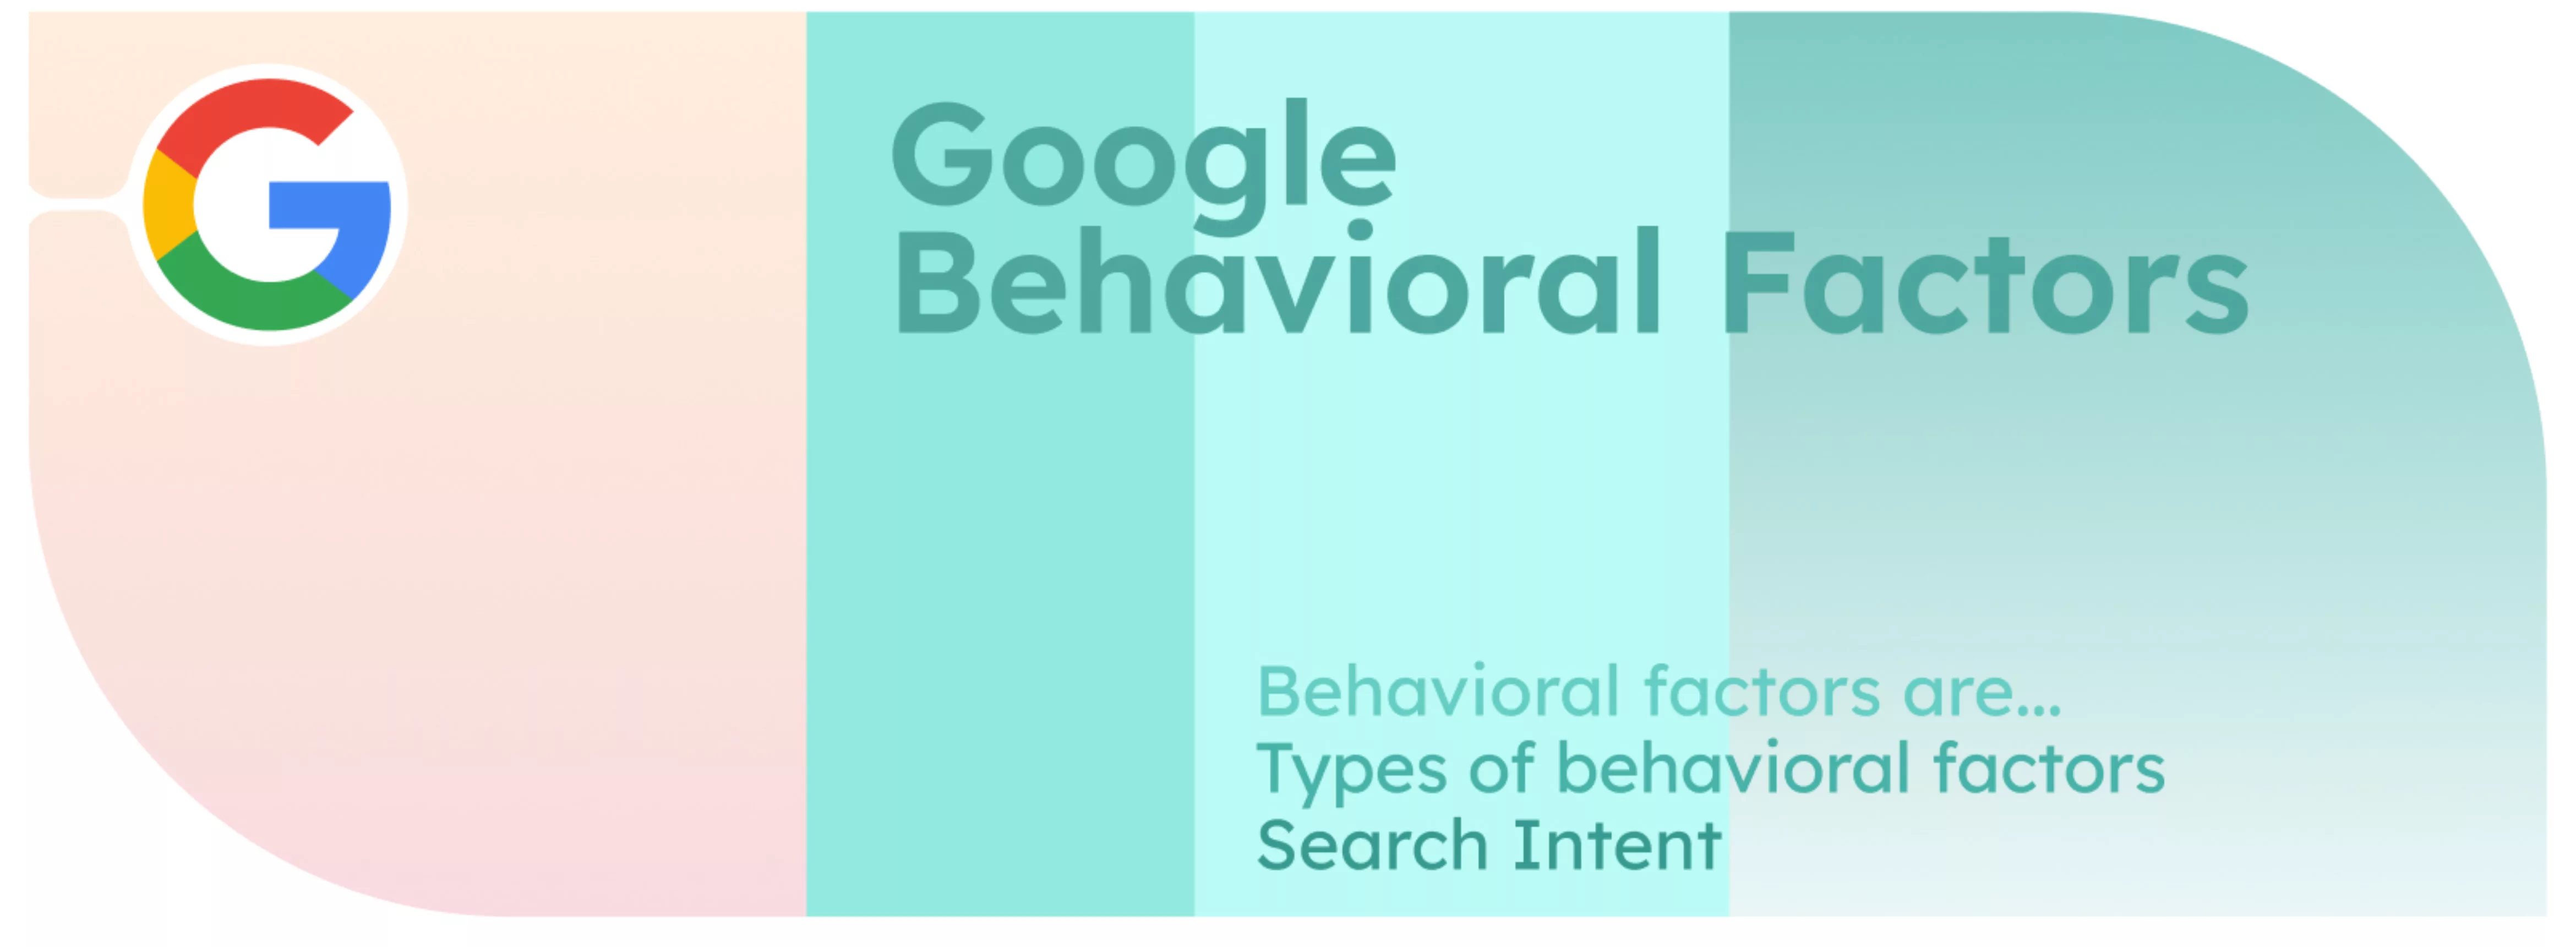 Google Behavioral Factors